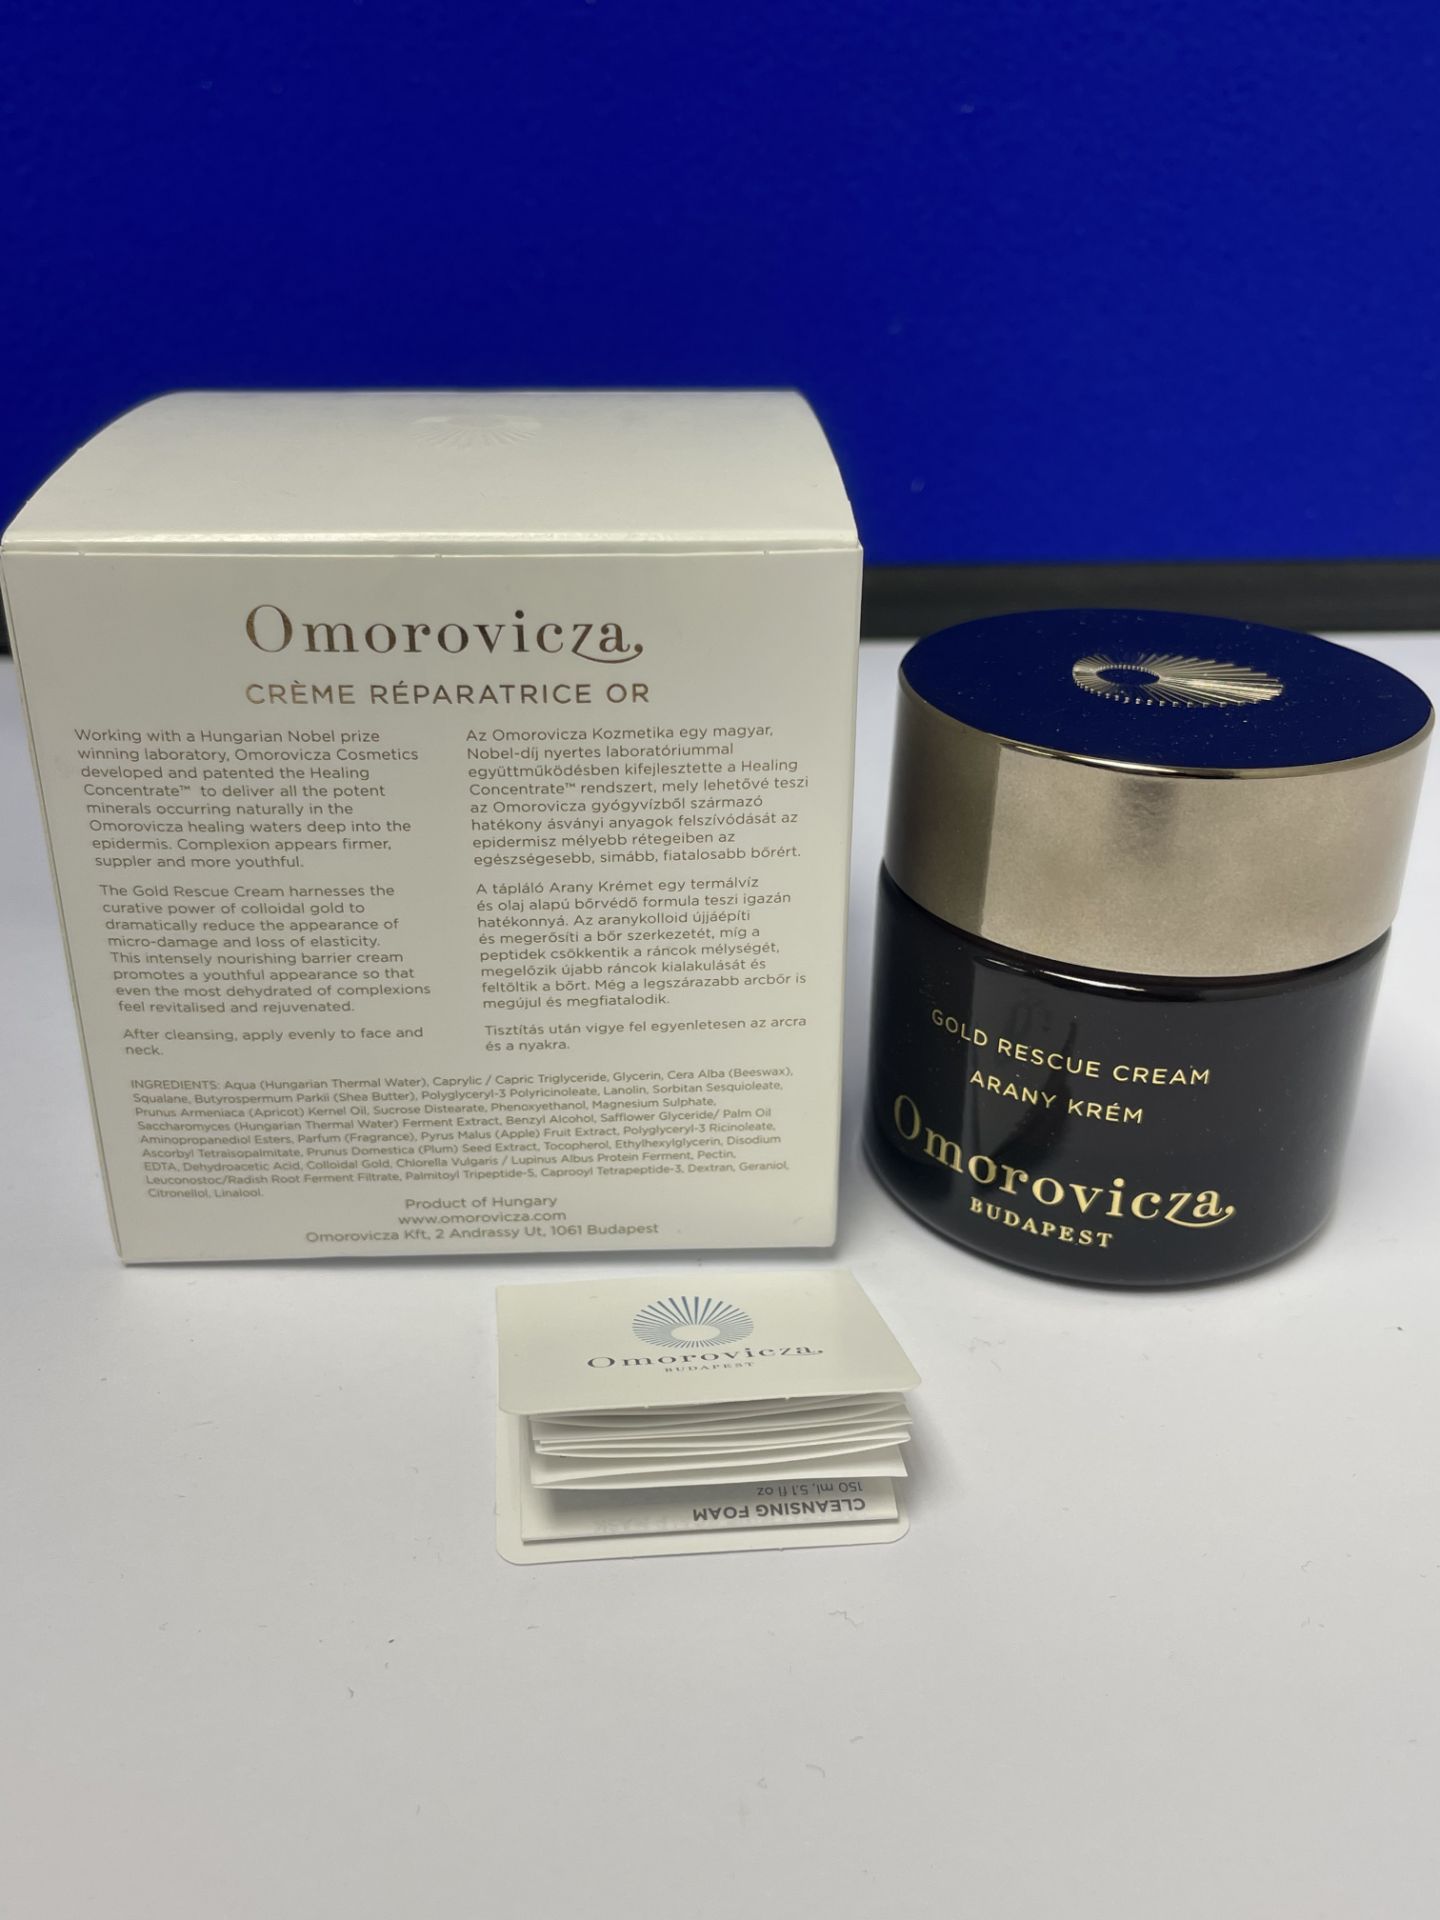 Omorovicza Budapest Gold Rescue Cream | RRP £220.00 - Image 2 of 2